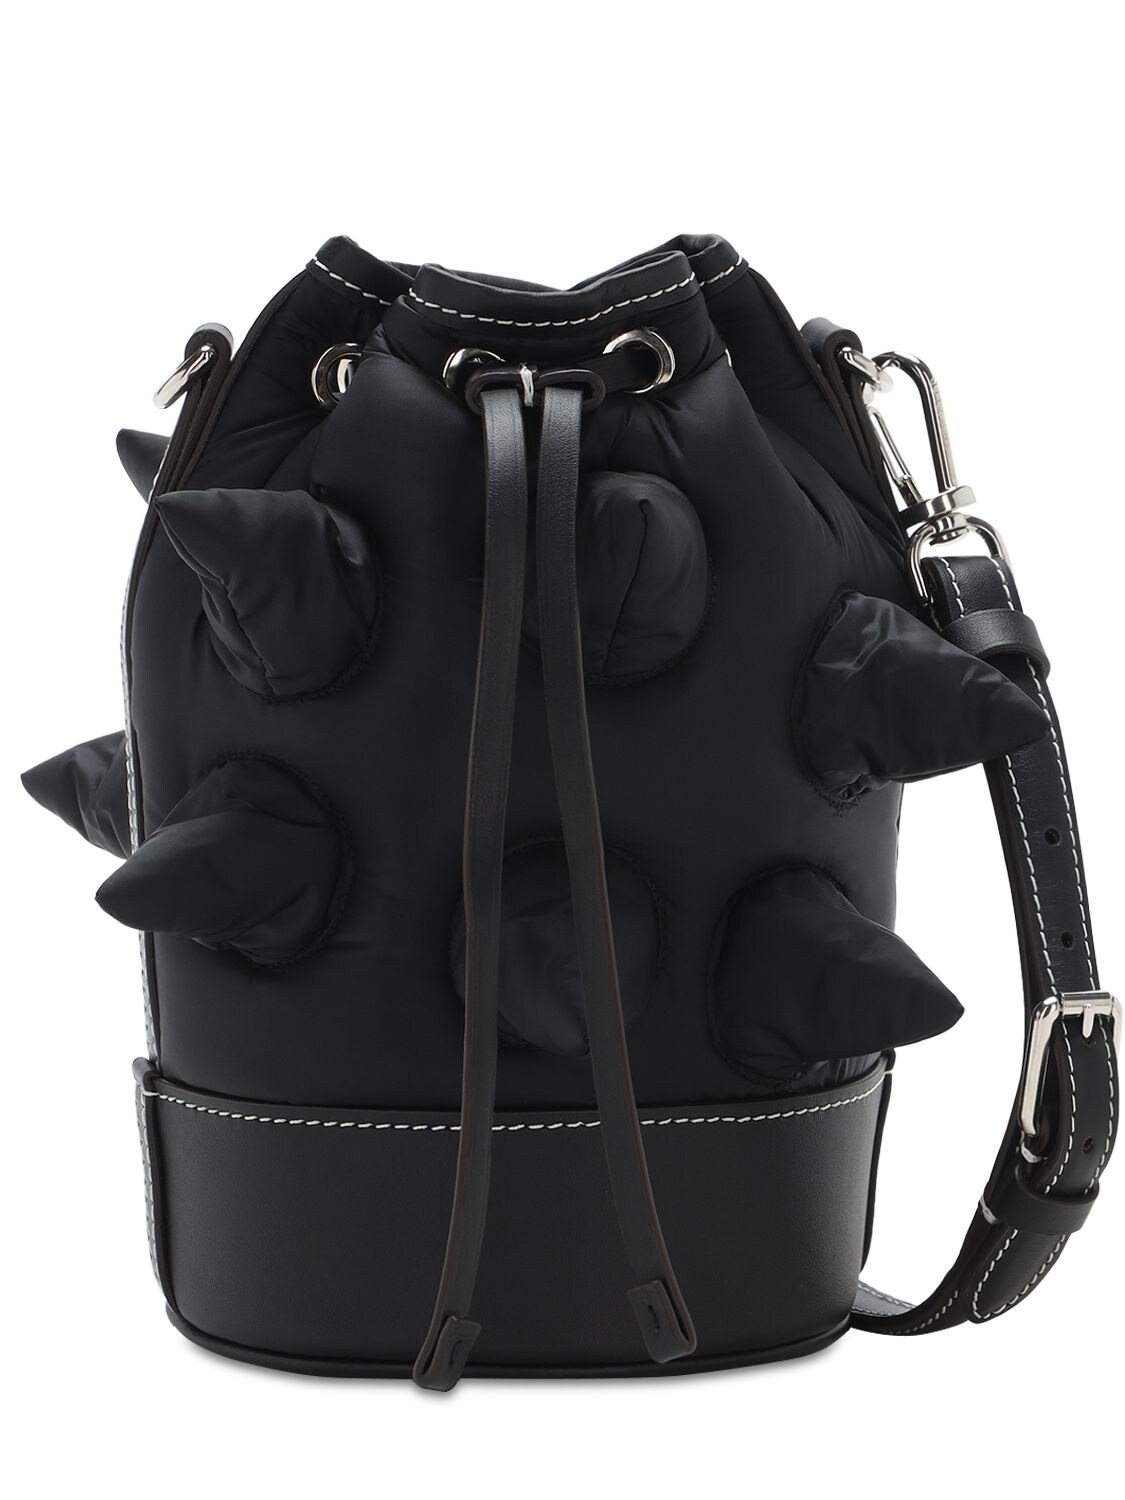 Moncler Genius Jw Anderson Leather & Nylon Bag In Black